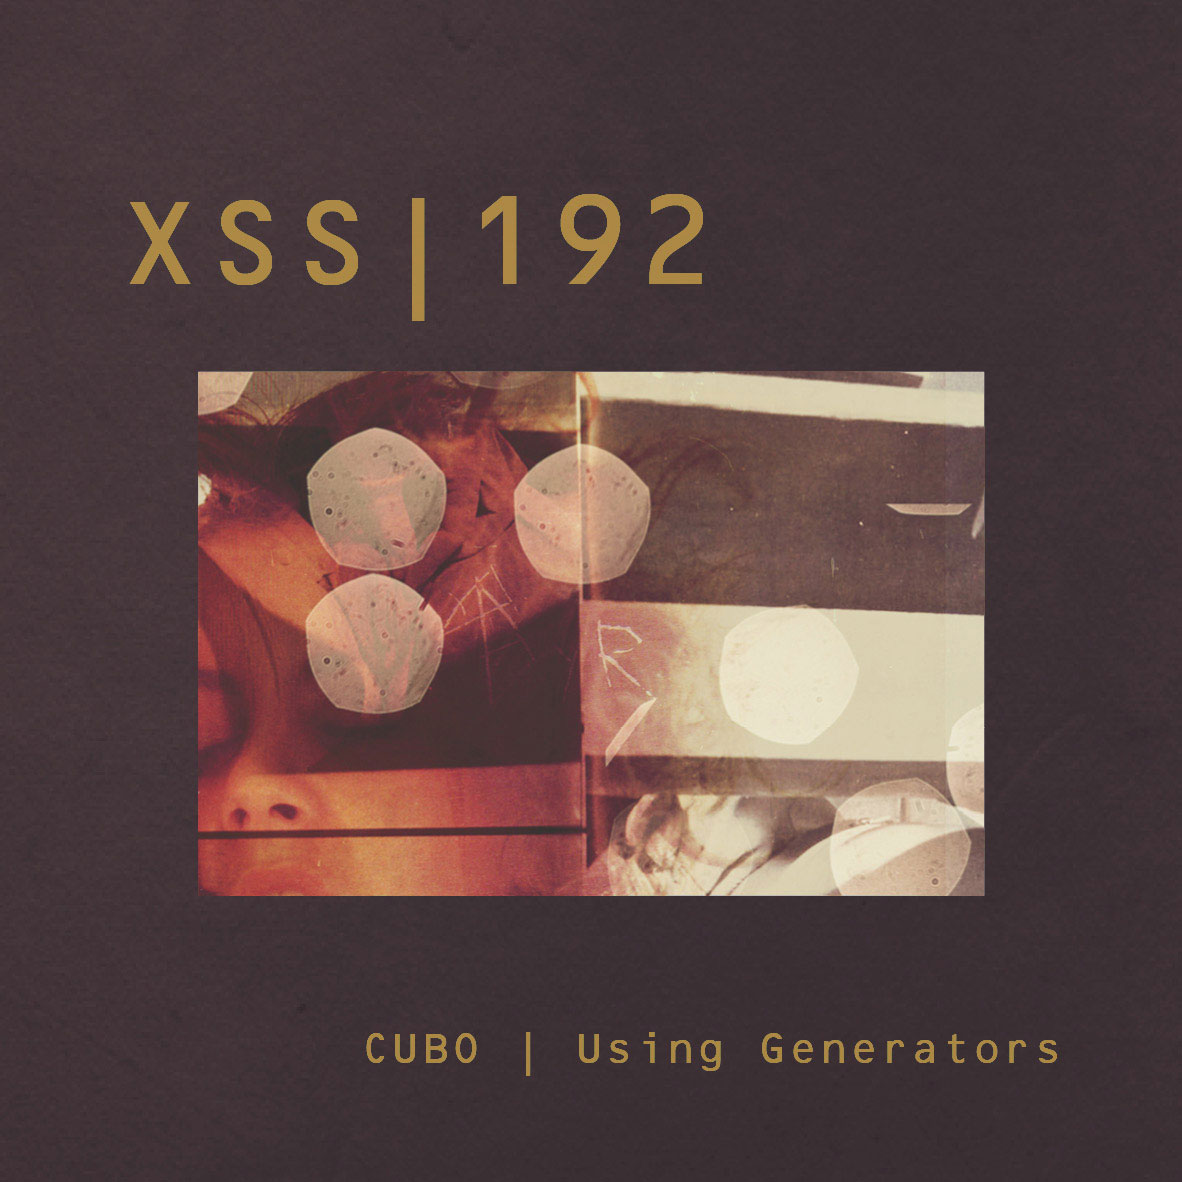 XSS192 | Cubo | Using Generators